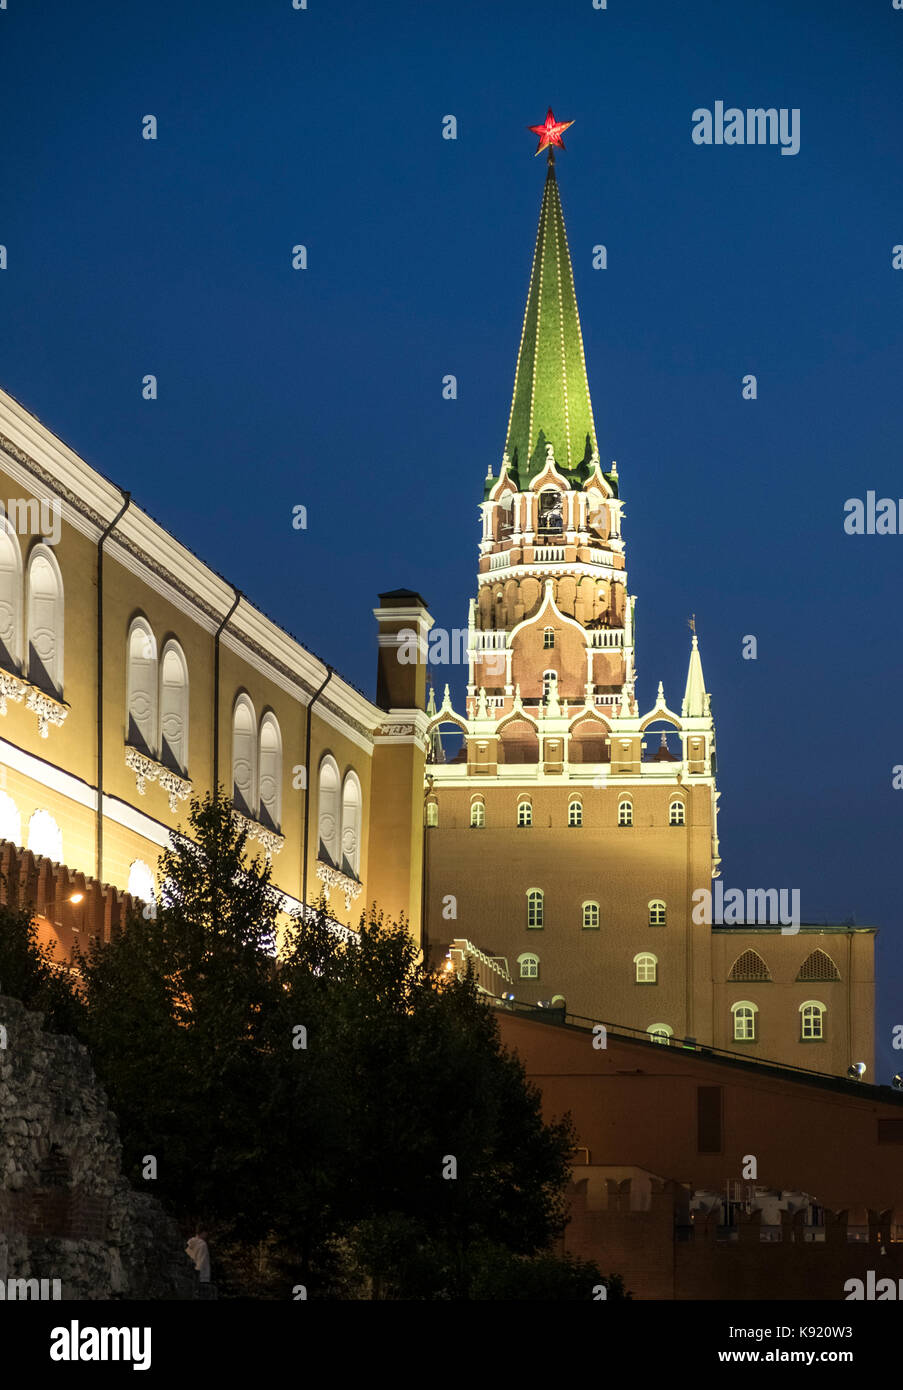 The Trinity (Troitskaya) Tower illuminated at night, The Kremlin, Moscow, Russia. Stock Photo